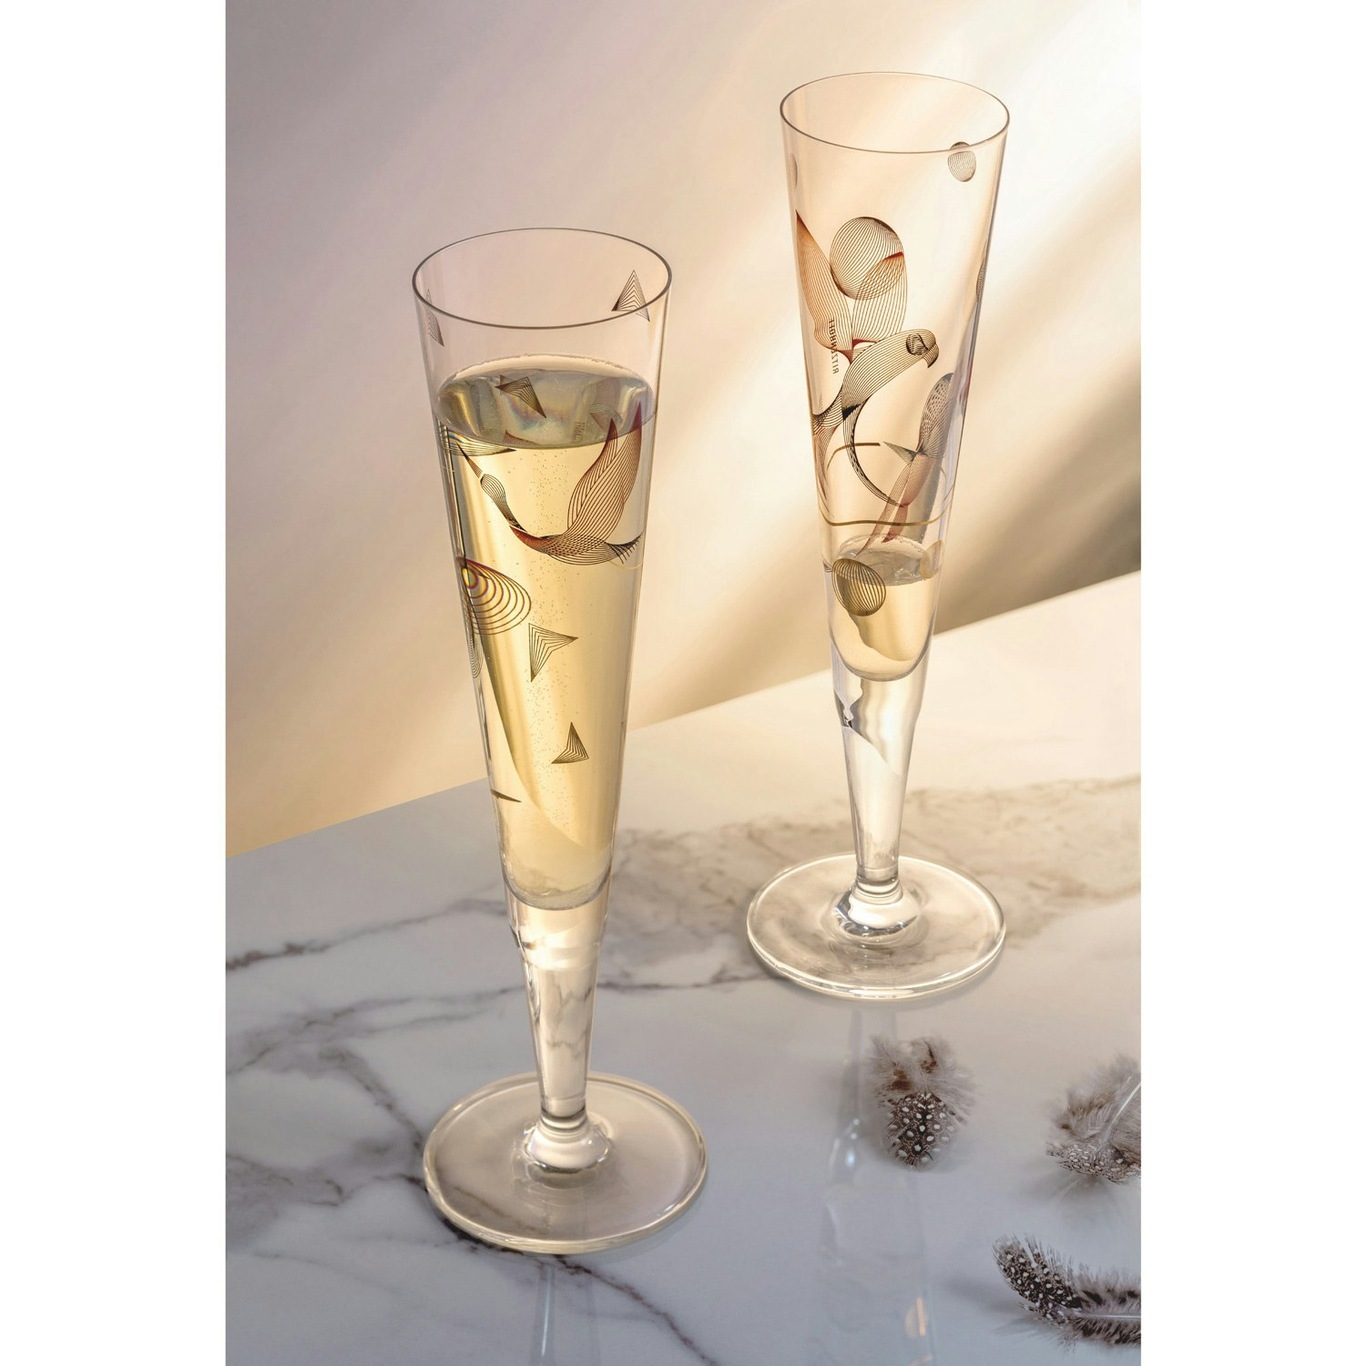 https://royaldesign.com/image/2/ritzenhoff-goldnacht-champagne-glass-no-15-0?w=800&quality=80